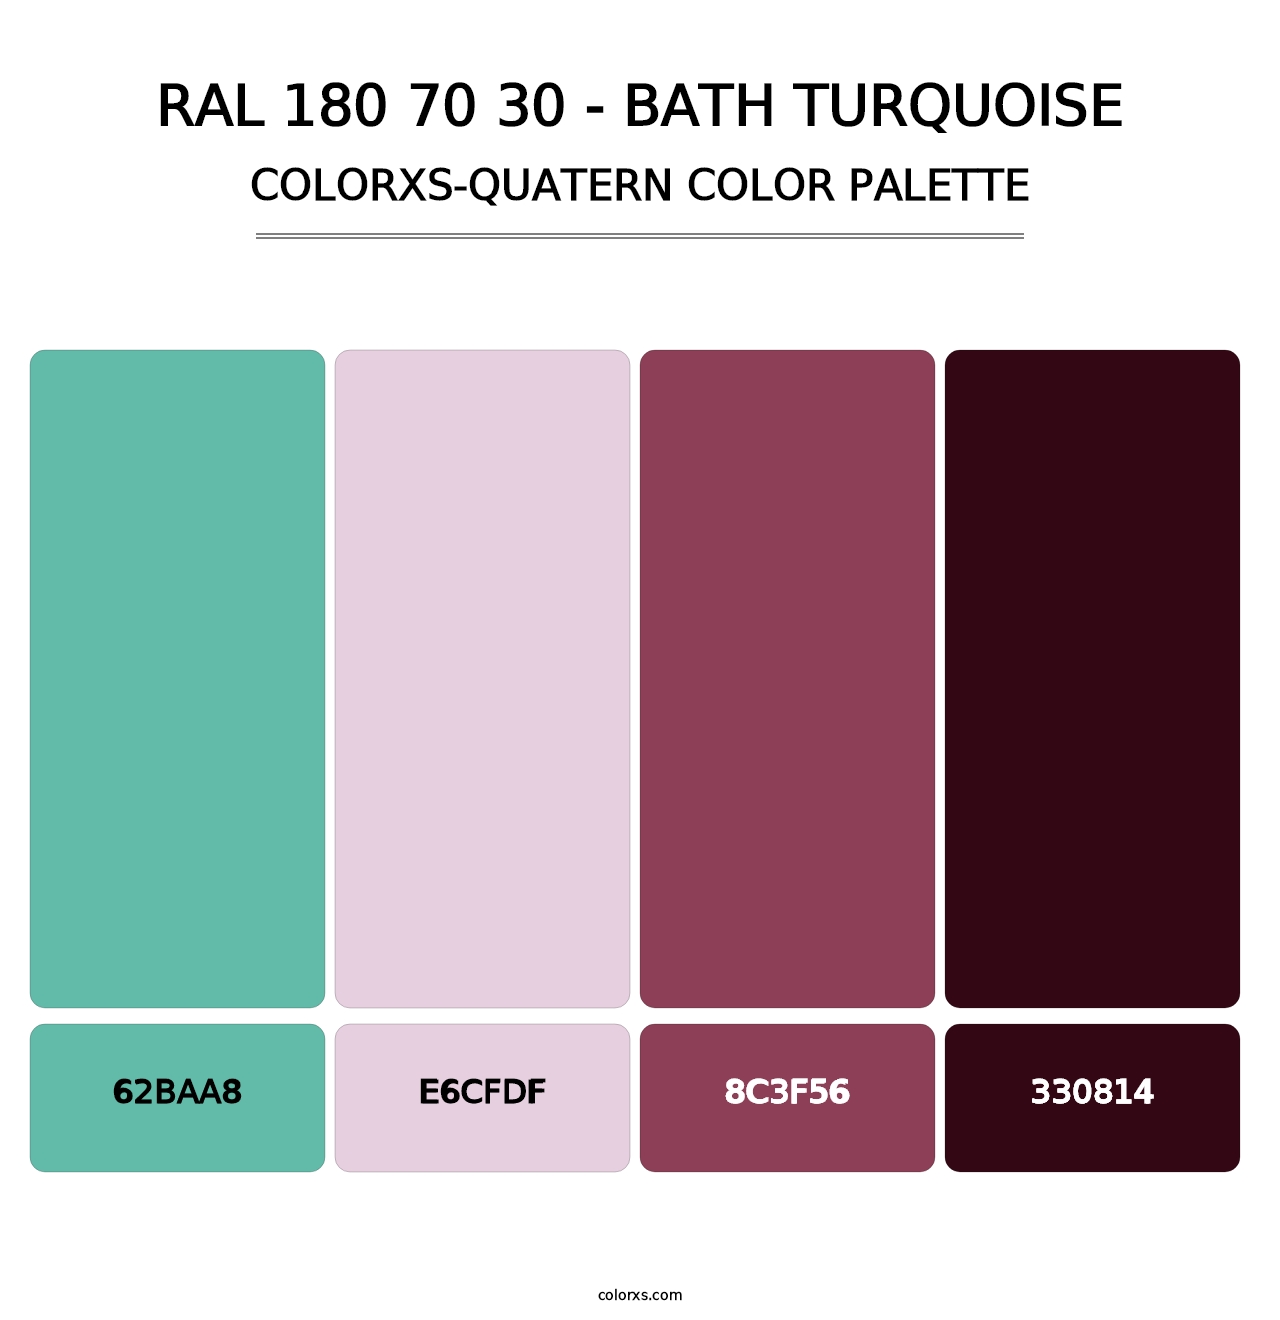 RAL 180 70 30 - Bath Turquoise - Colorxs Quatern Palette